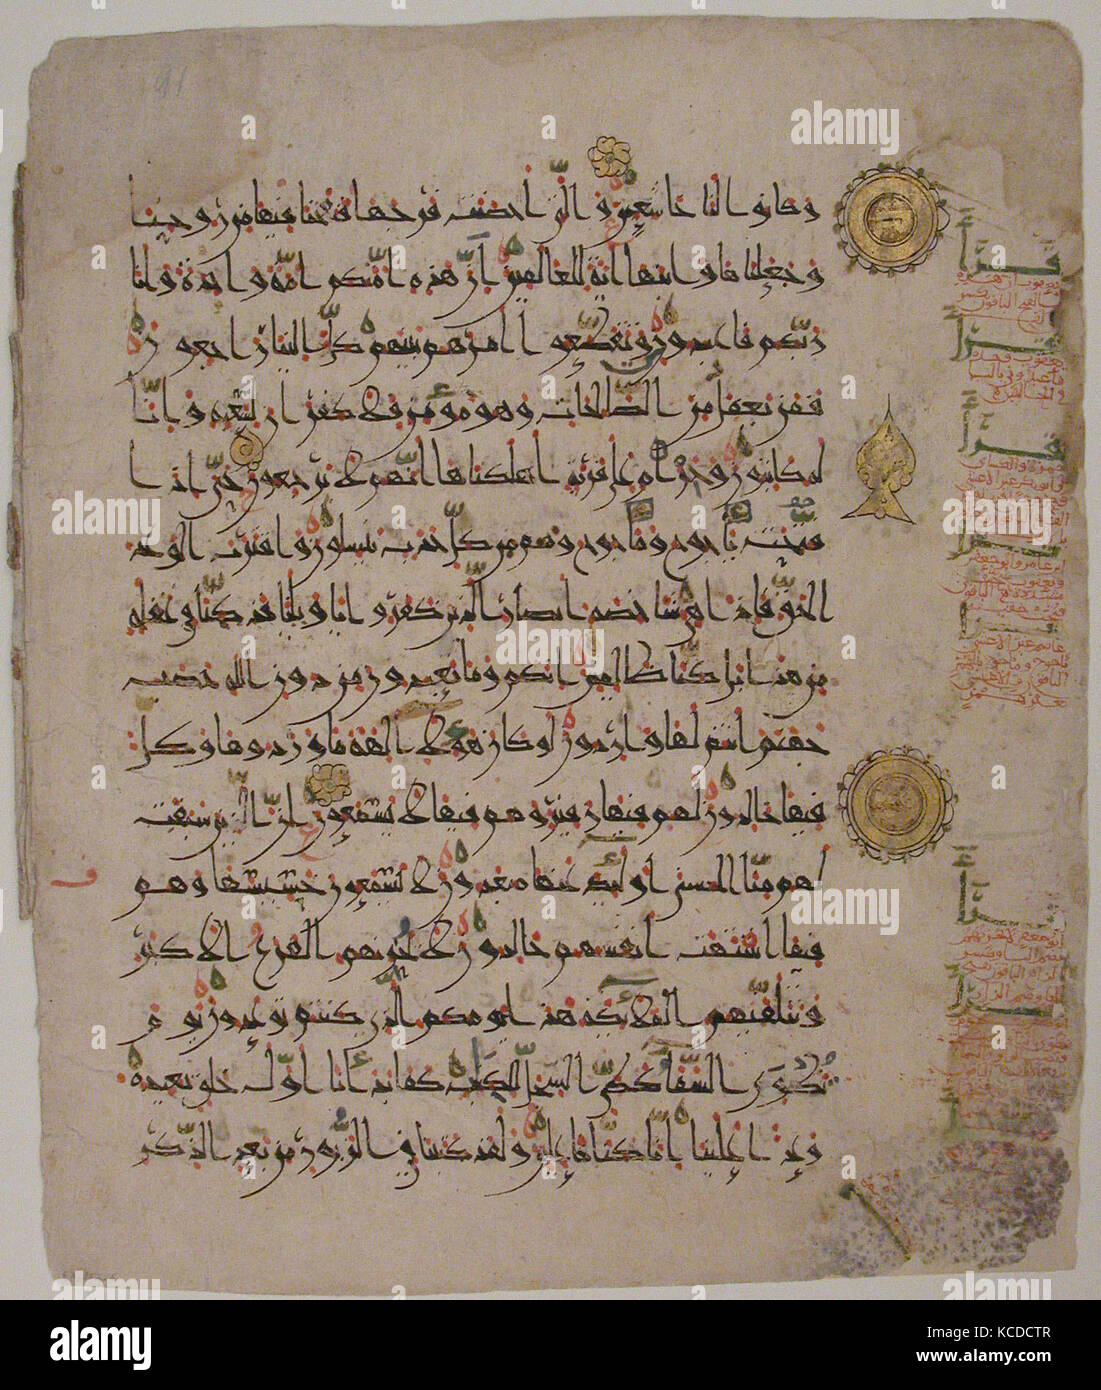 Folio from a Qur'an Manuscript, second half 10th century Stock Photo